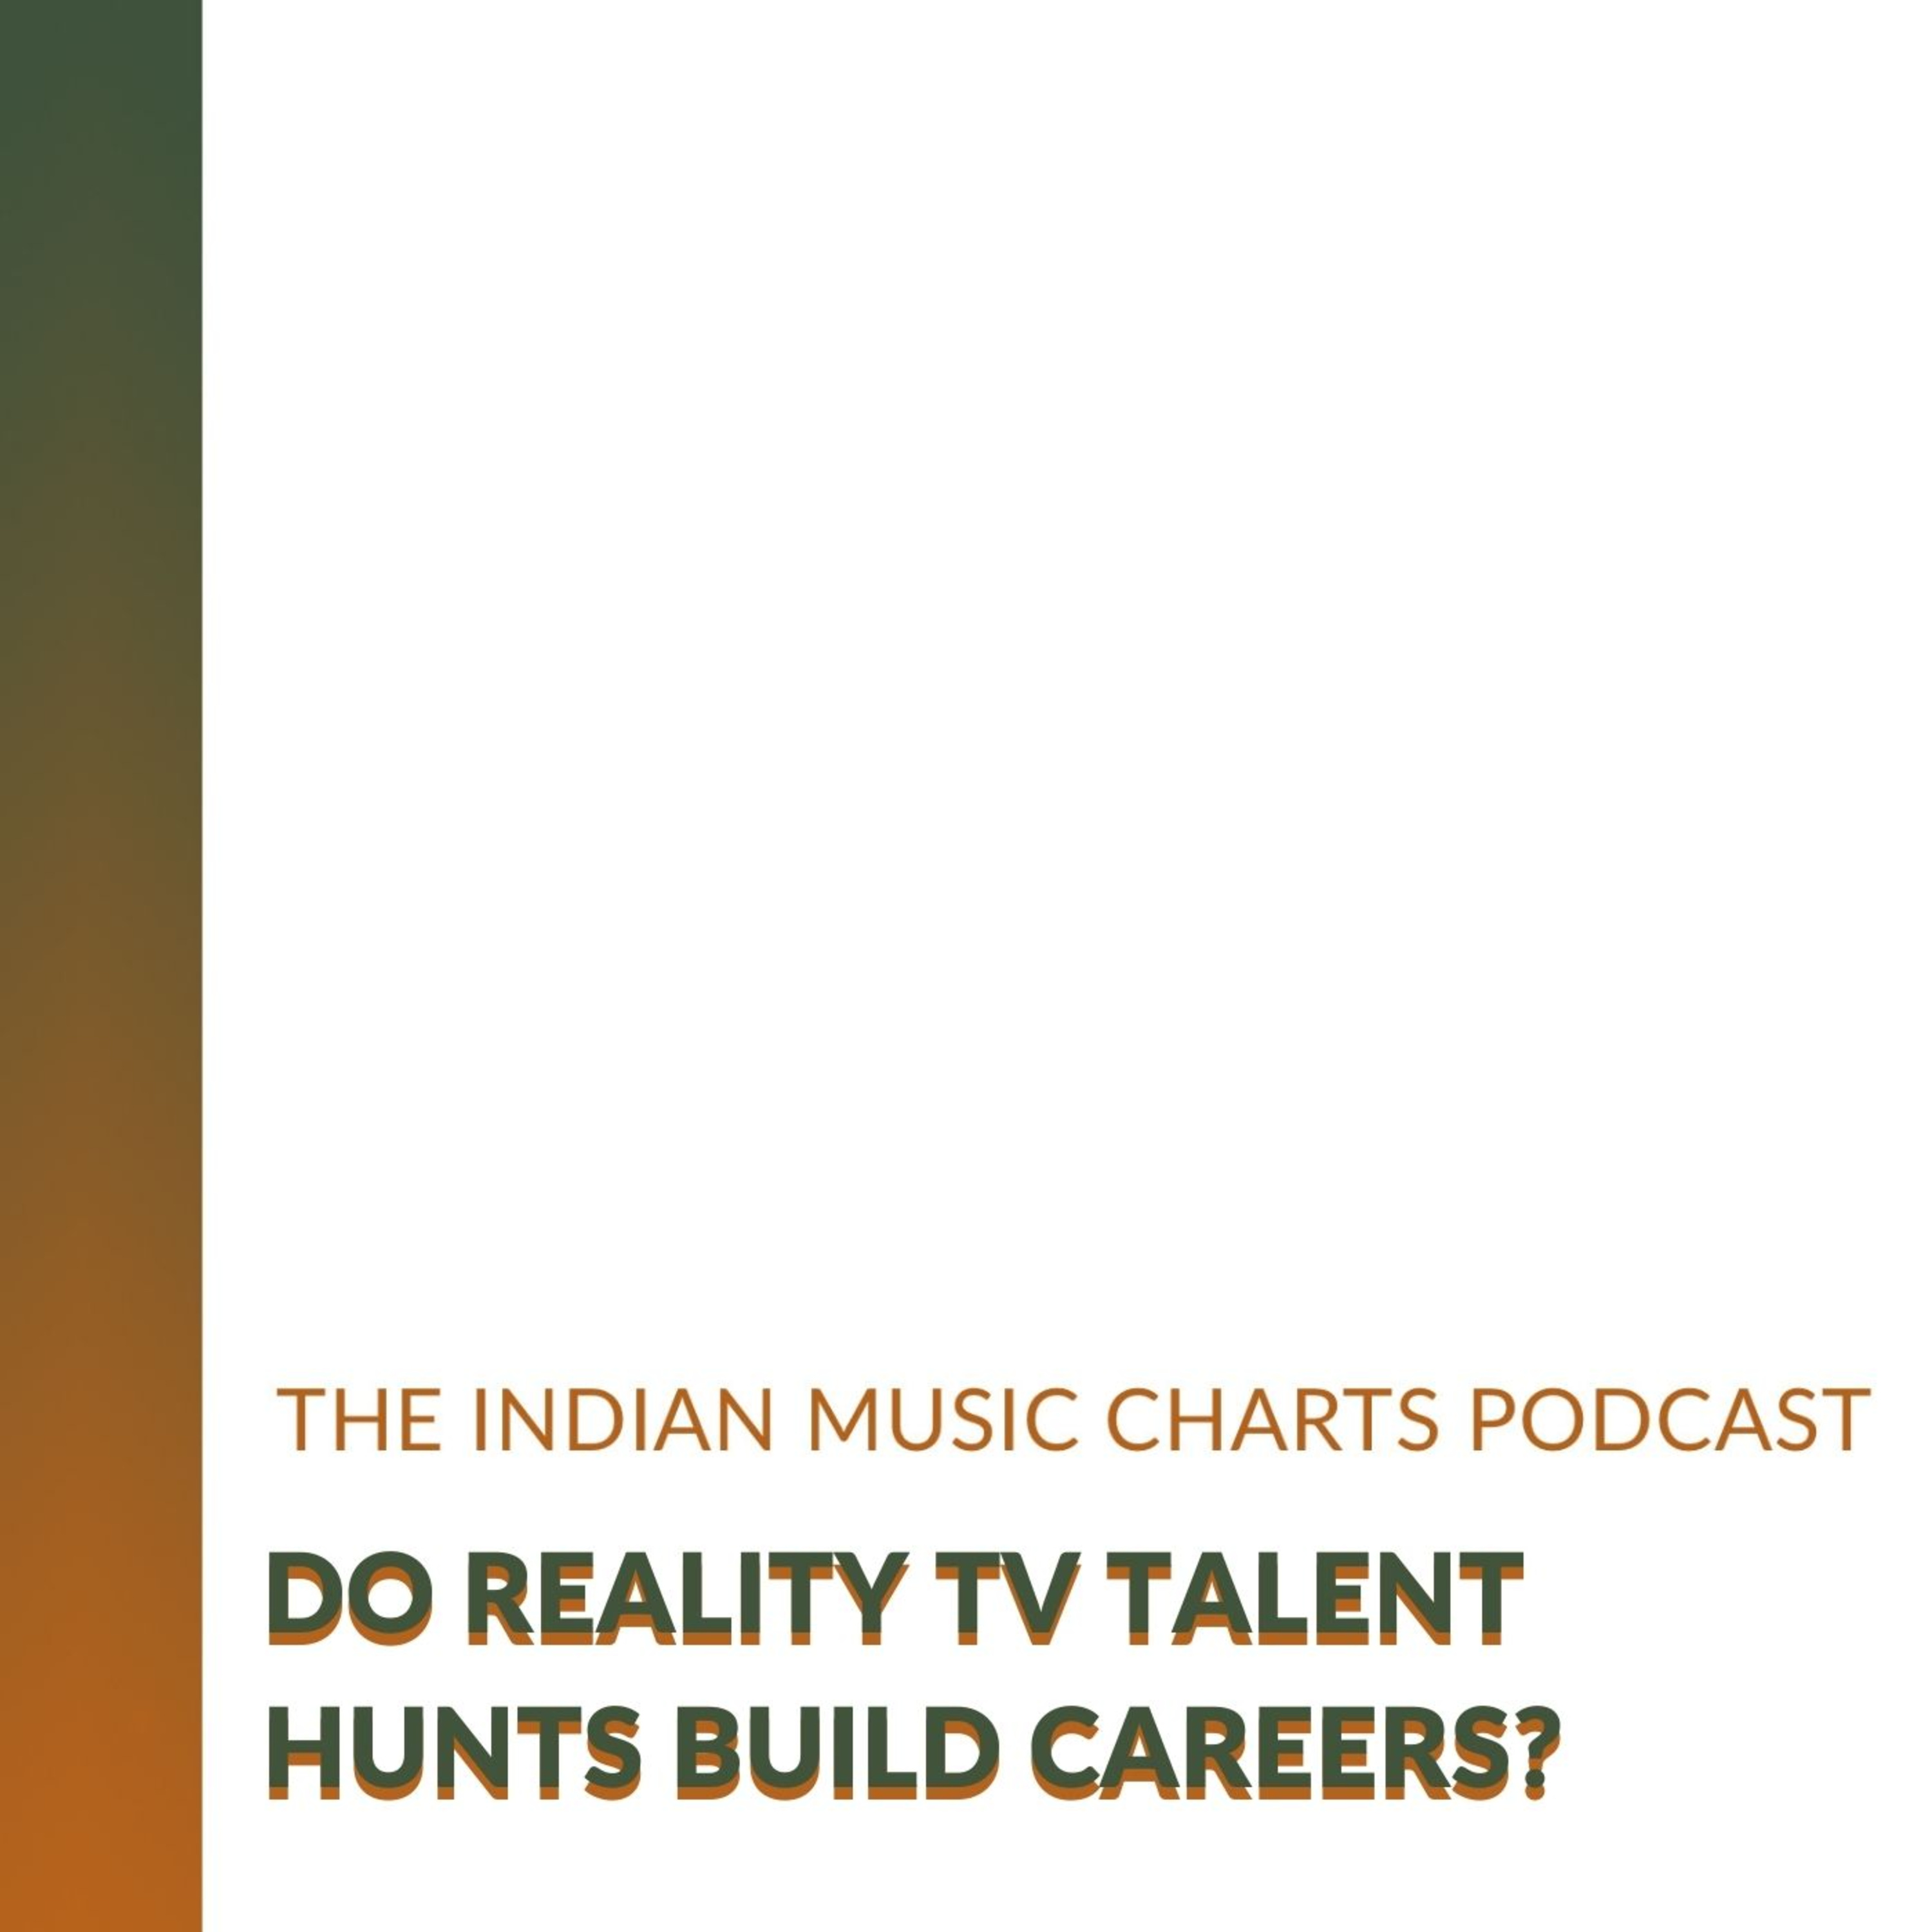 Do reality TV talent hunts build careers?